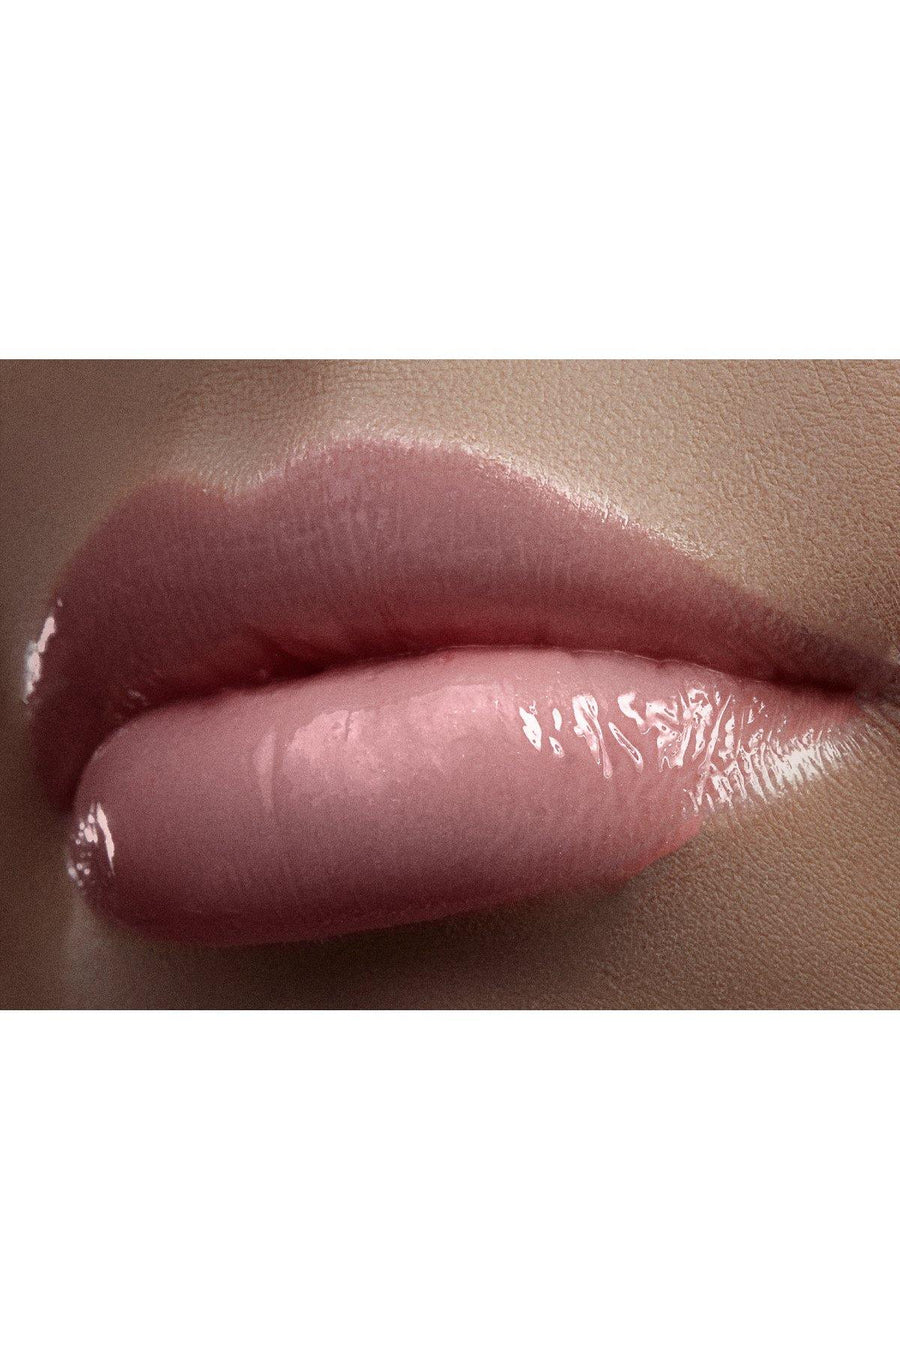 Lip Gloss #8 - Pango Peach - Blend Mineral Cosmetics